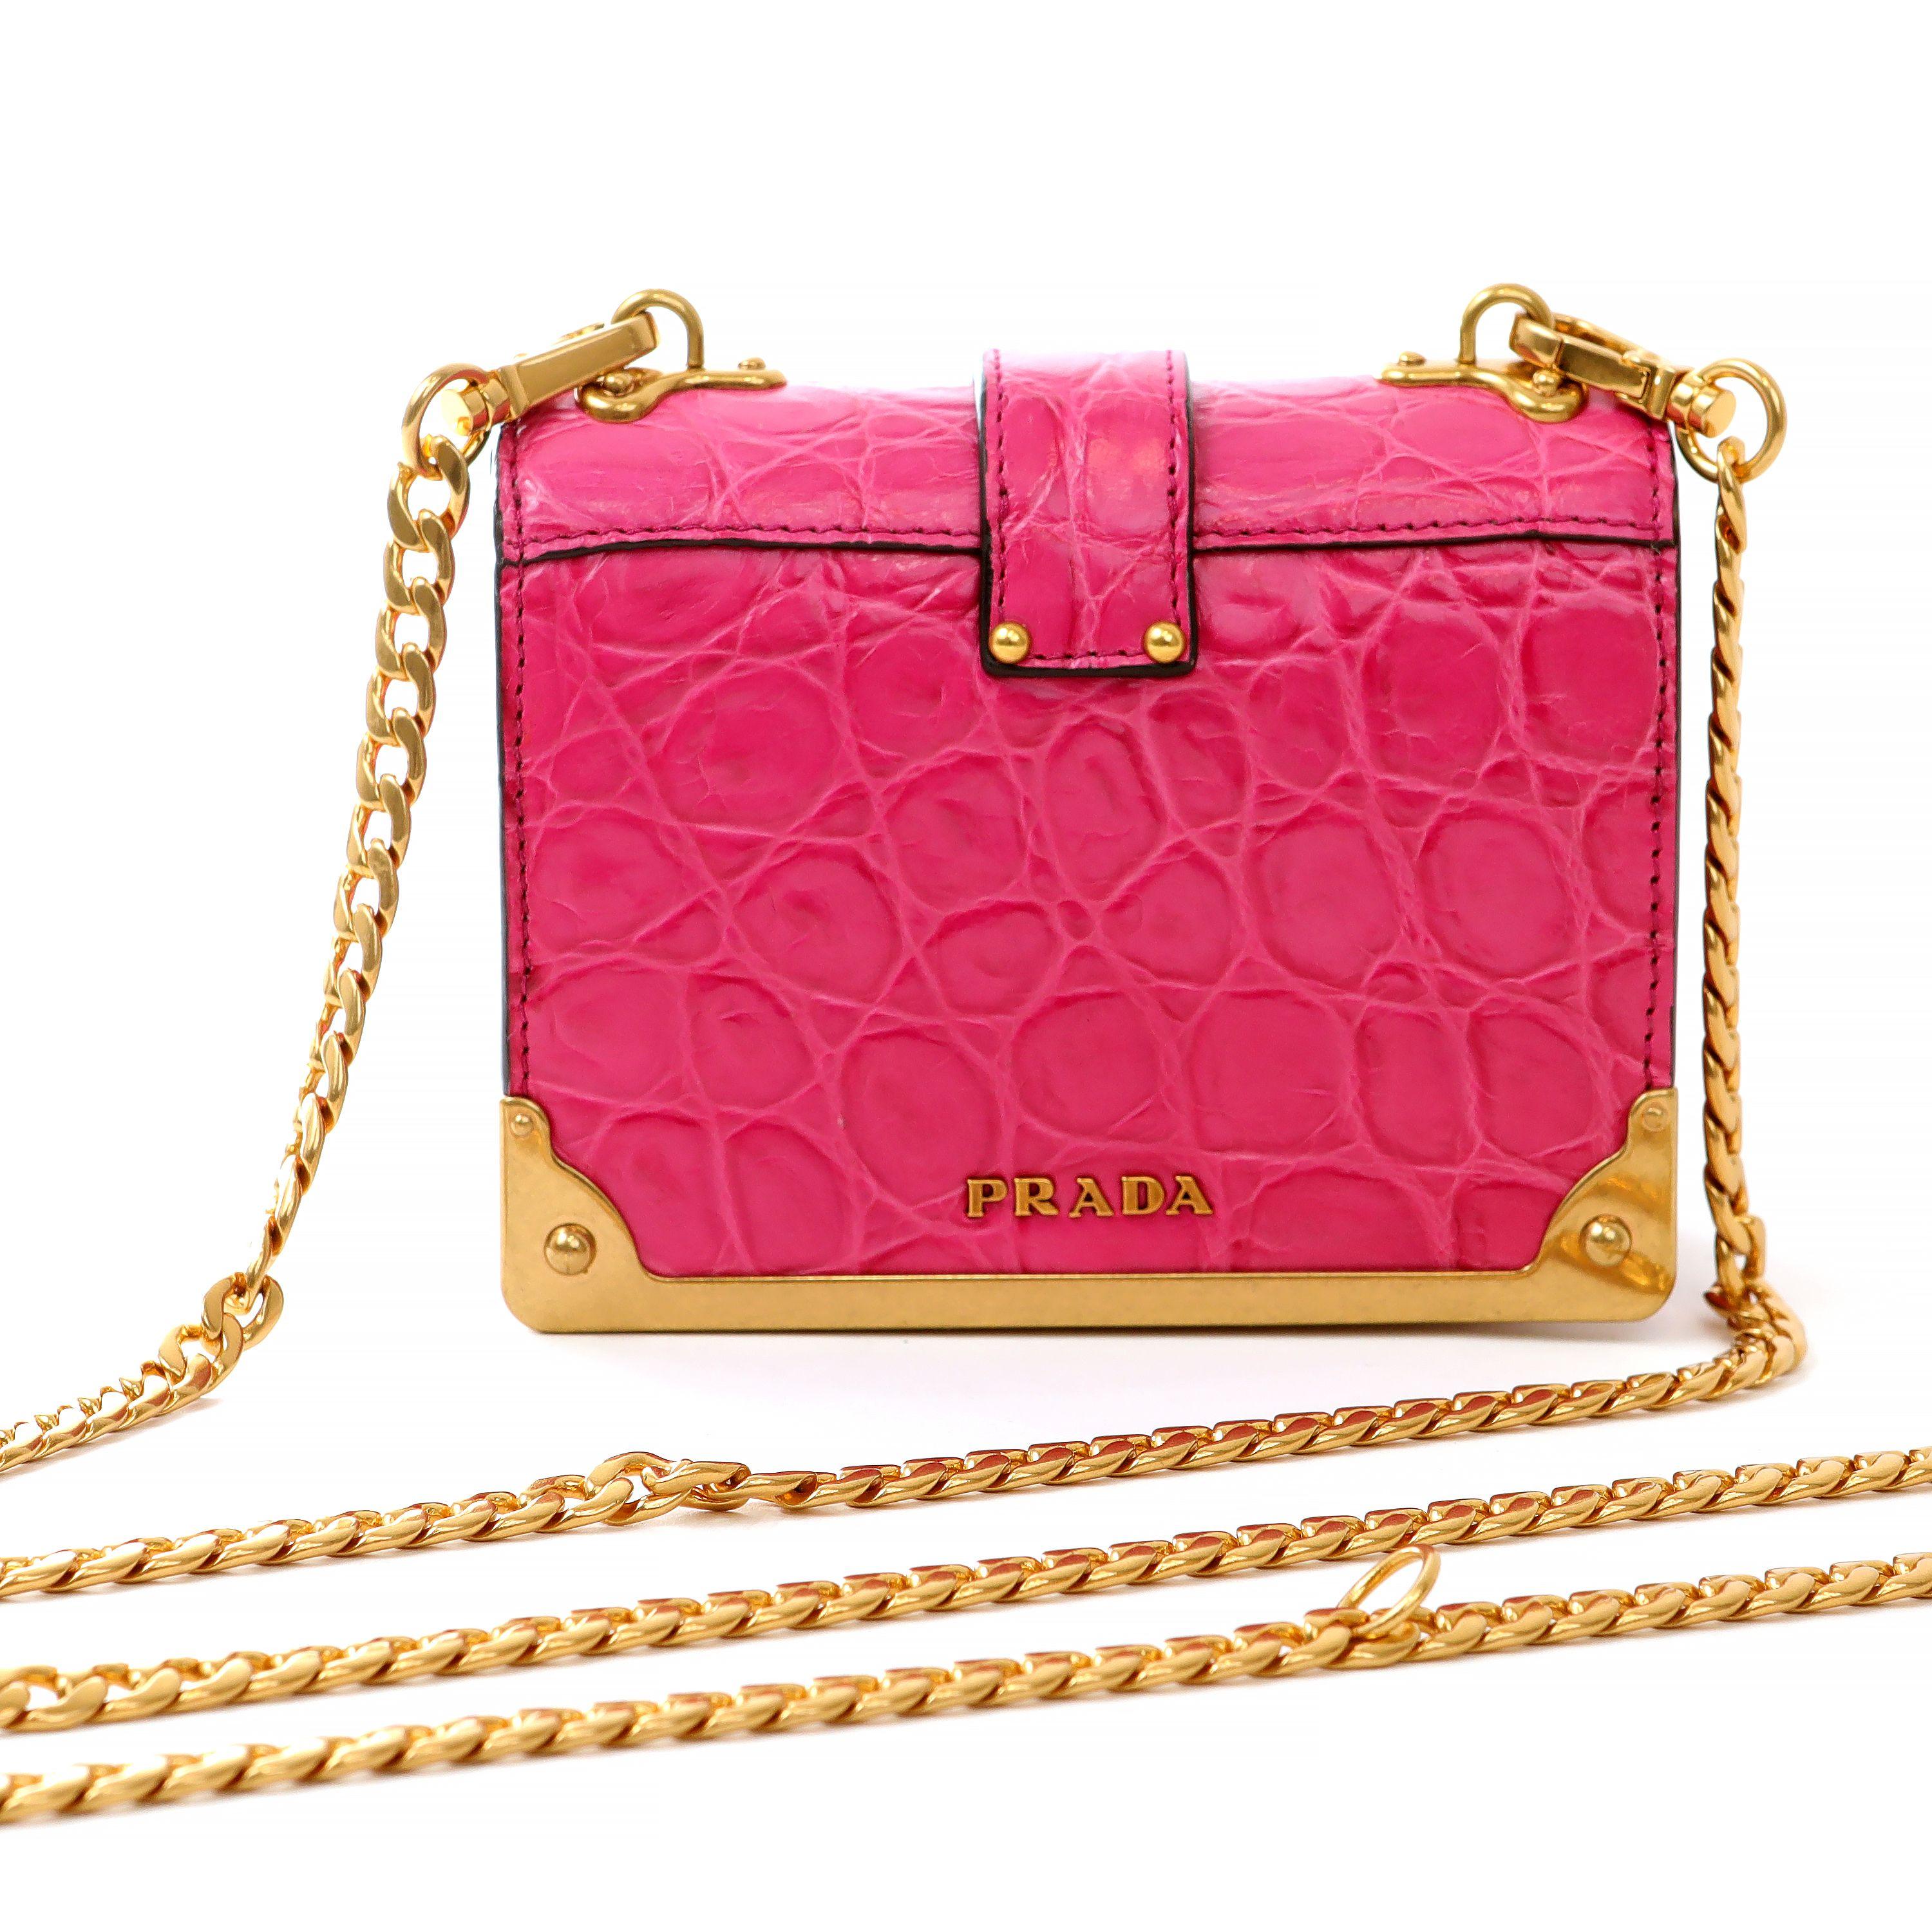 Rose Sac micro-cahier Prada rose avec accessoires dorés en vente